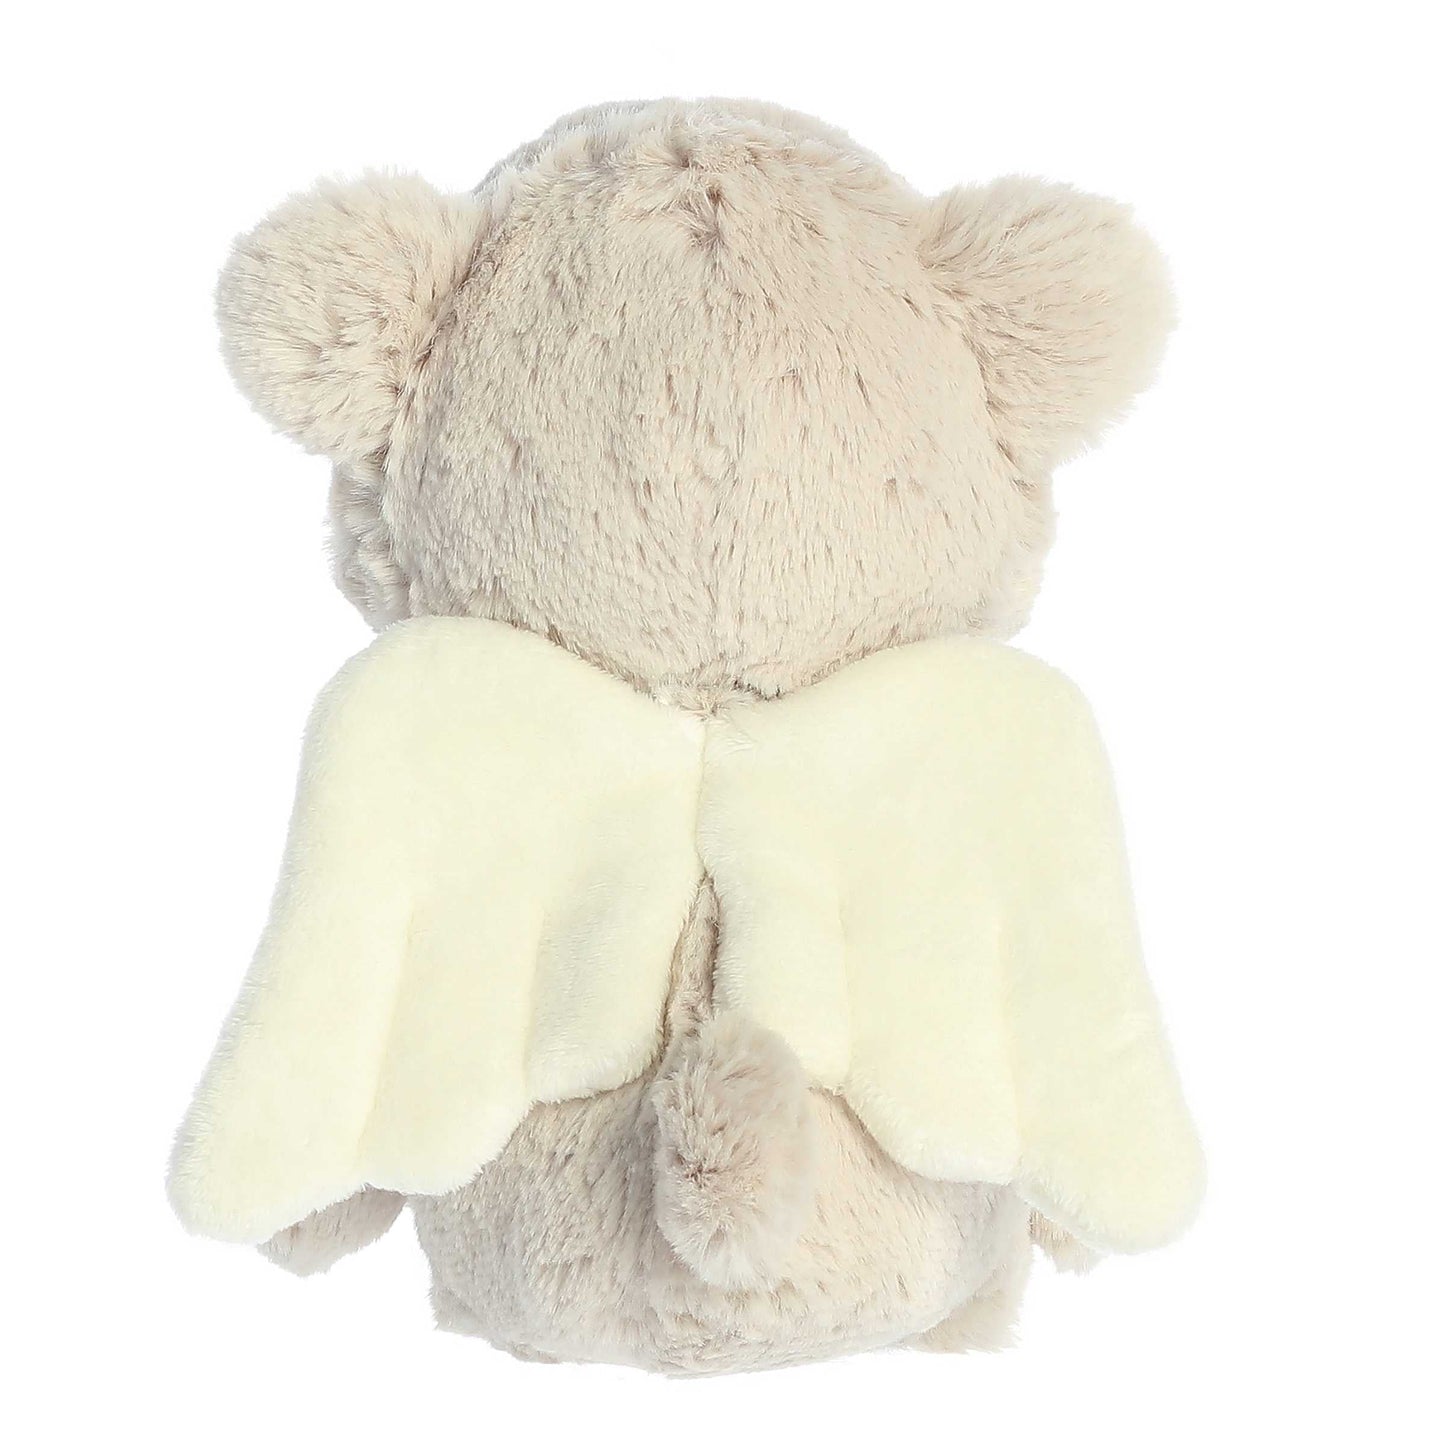 Stuffy - Precious Moments - Guardian Angel Bear 12"